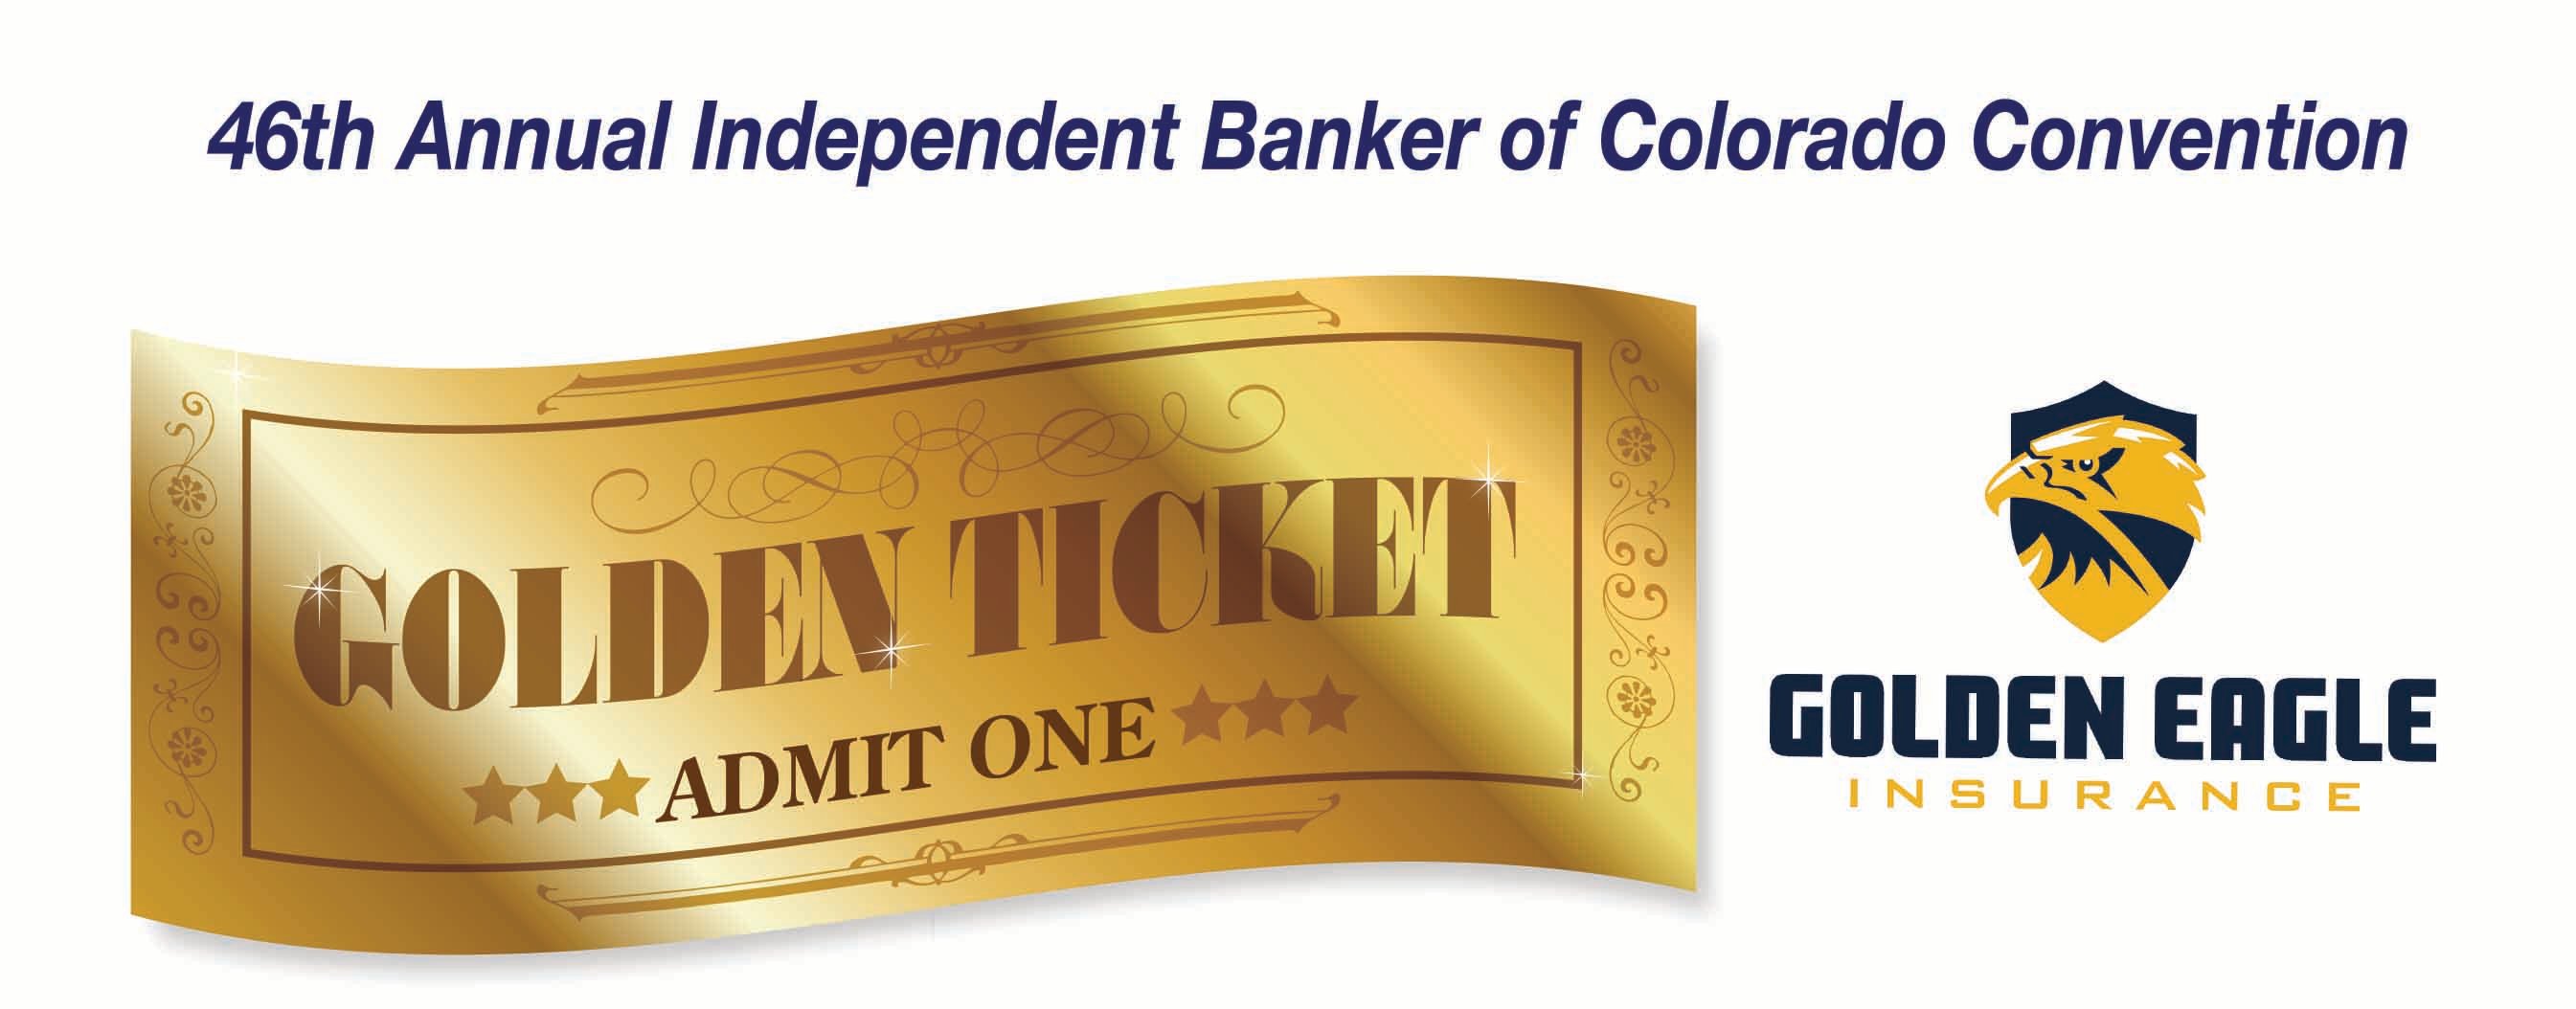 Golden Eagle Insurance Independent Banker of Colorado Convention